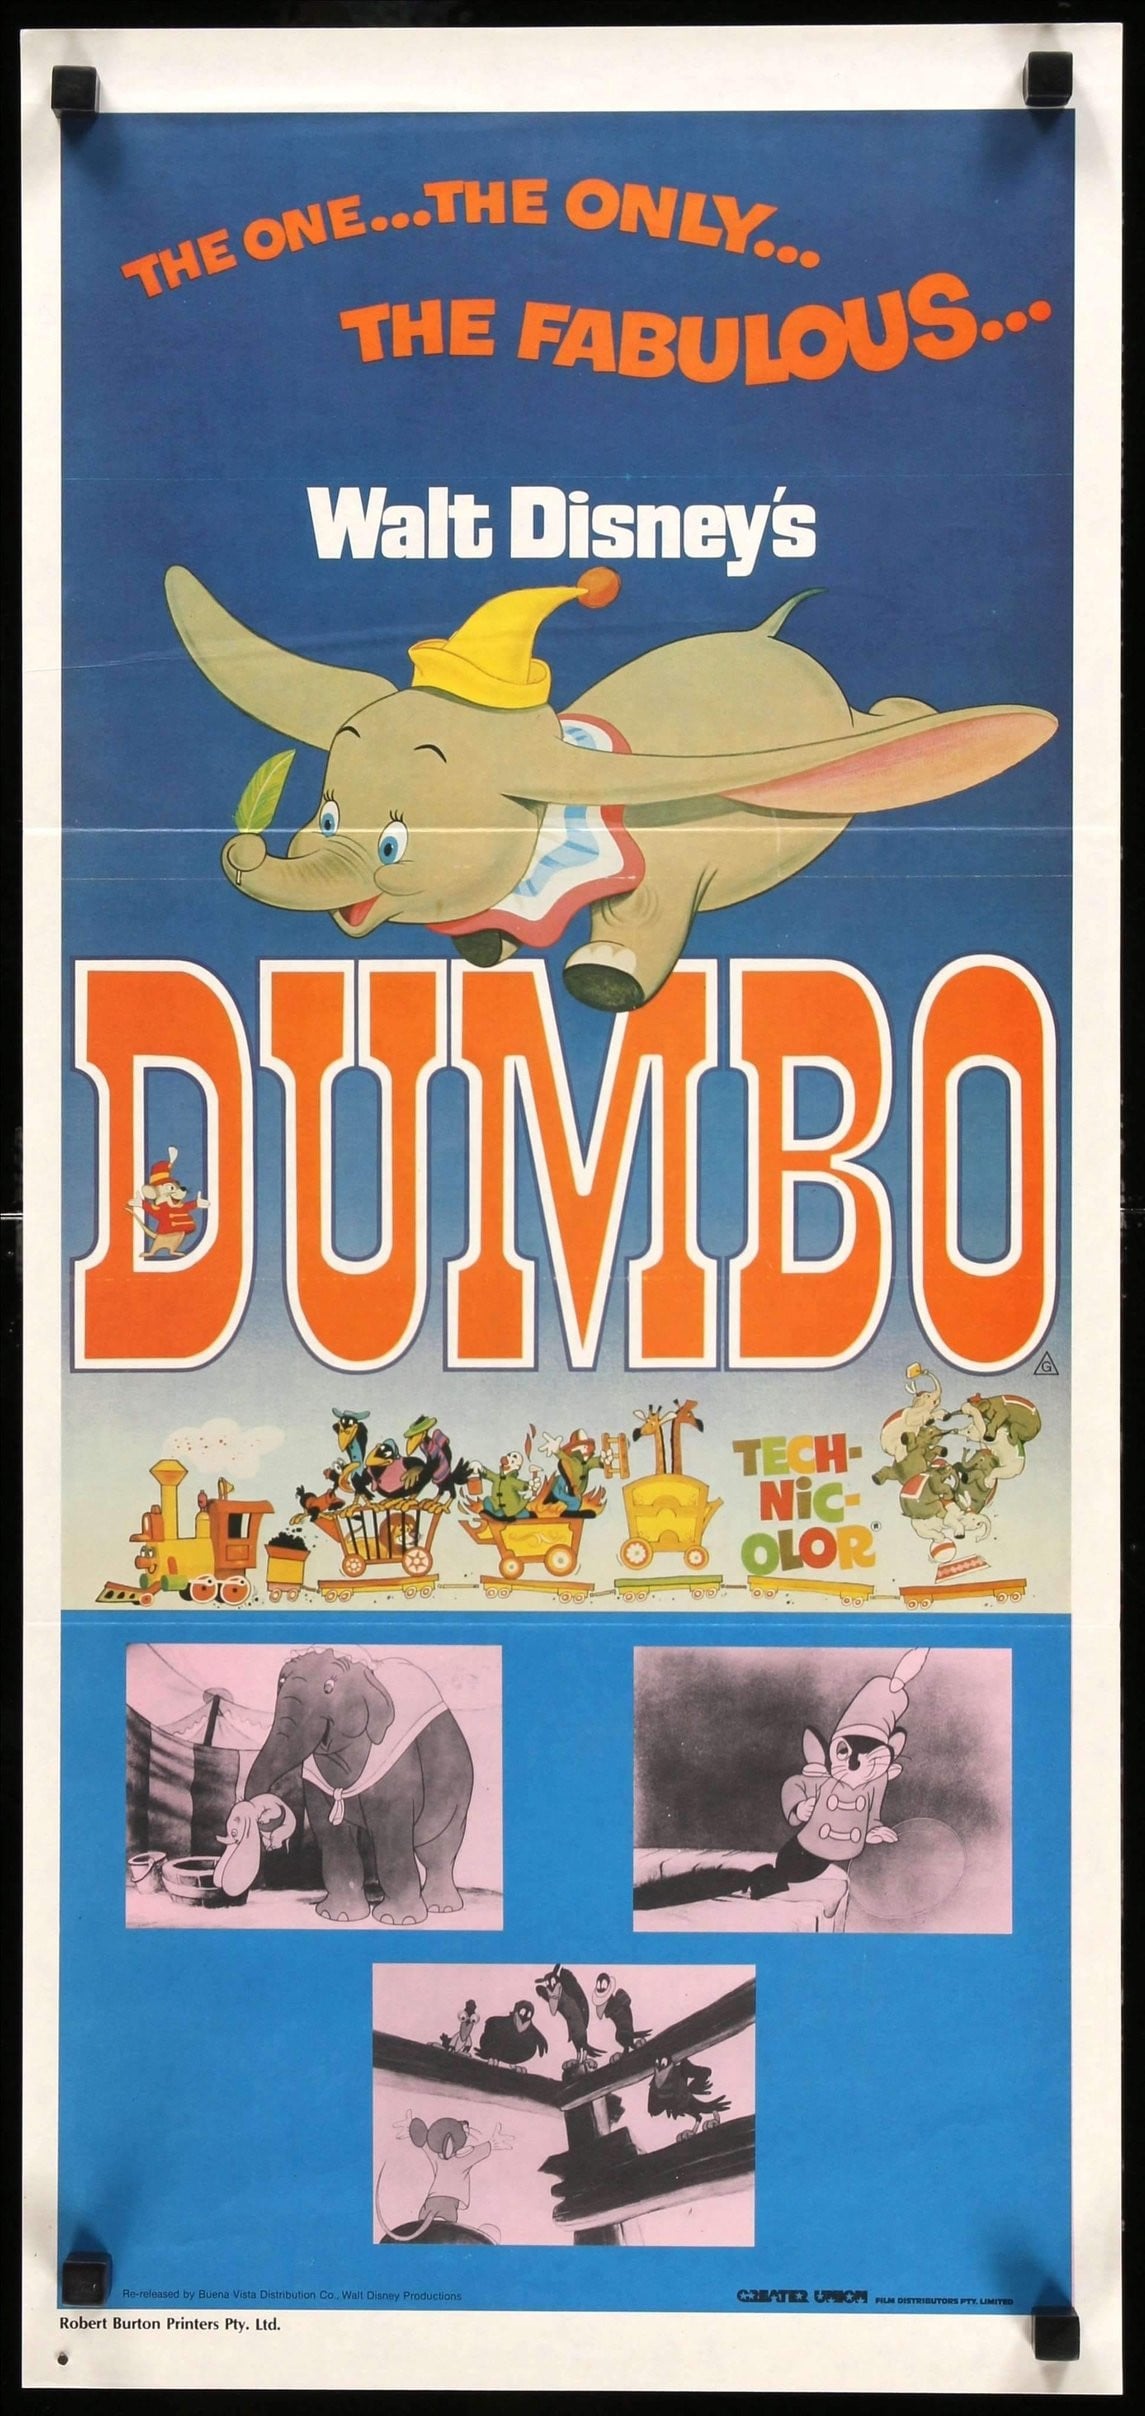 Dumbo (1941) original movie poster for sale at Original Film Art